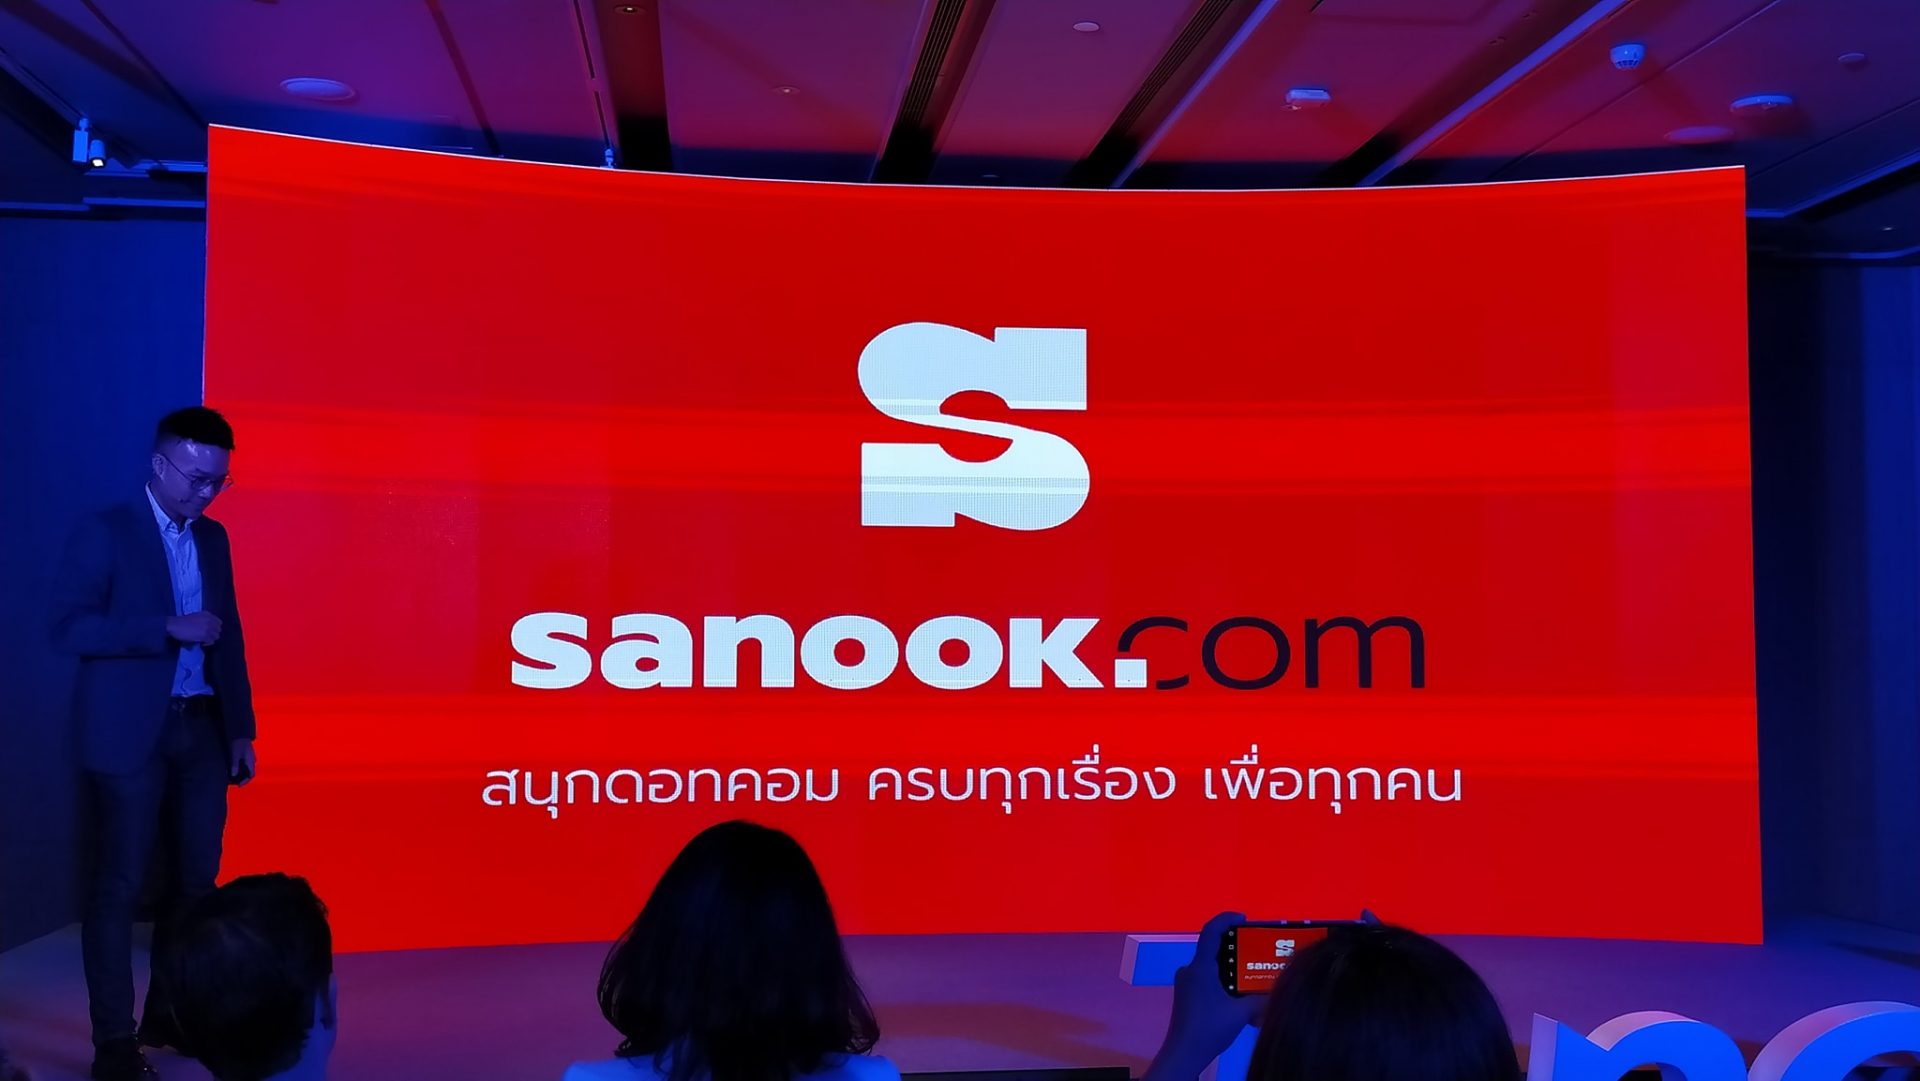 sanook.com ครบรอบ 21 ปี: ครบรอบทั้งที มีรีแบรนด์กันบ้าง